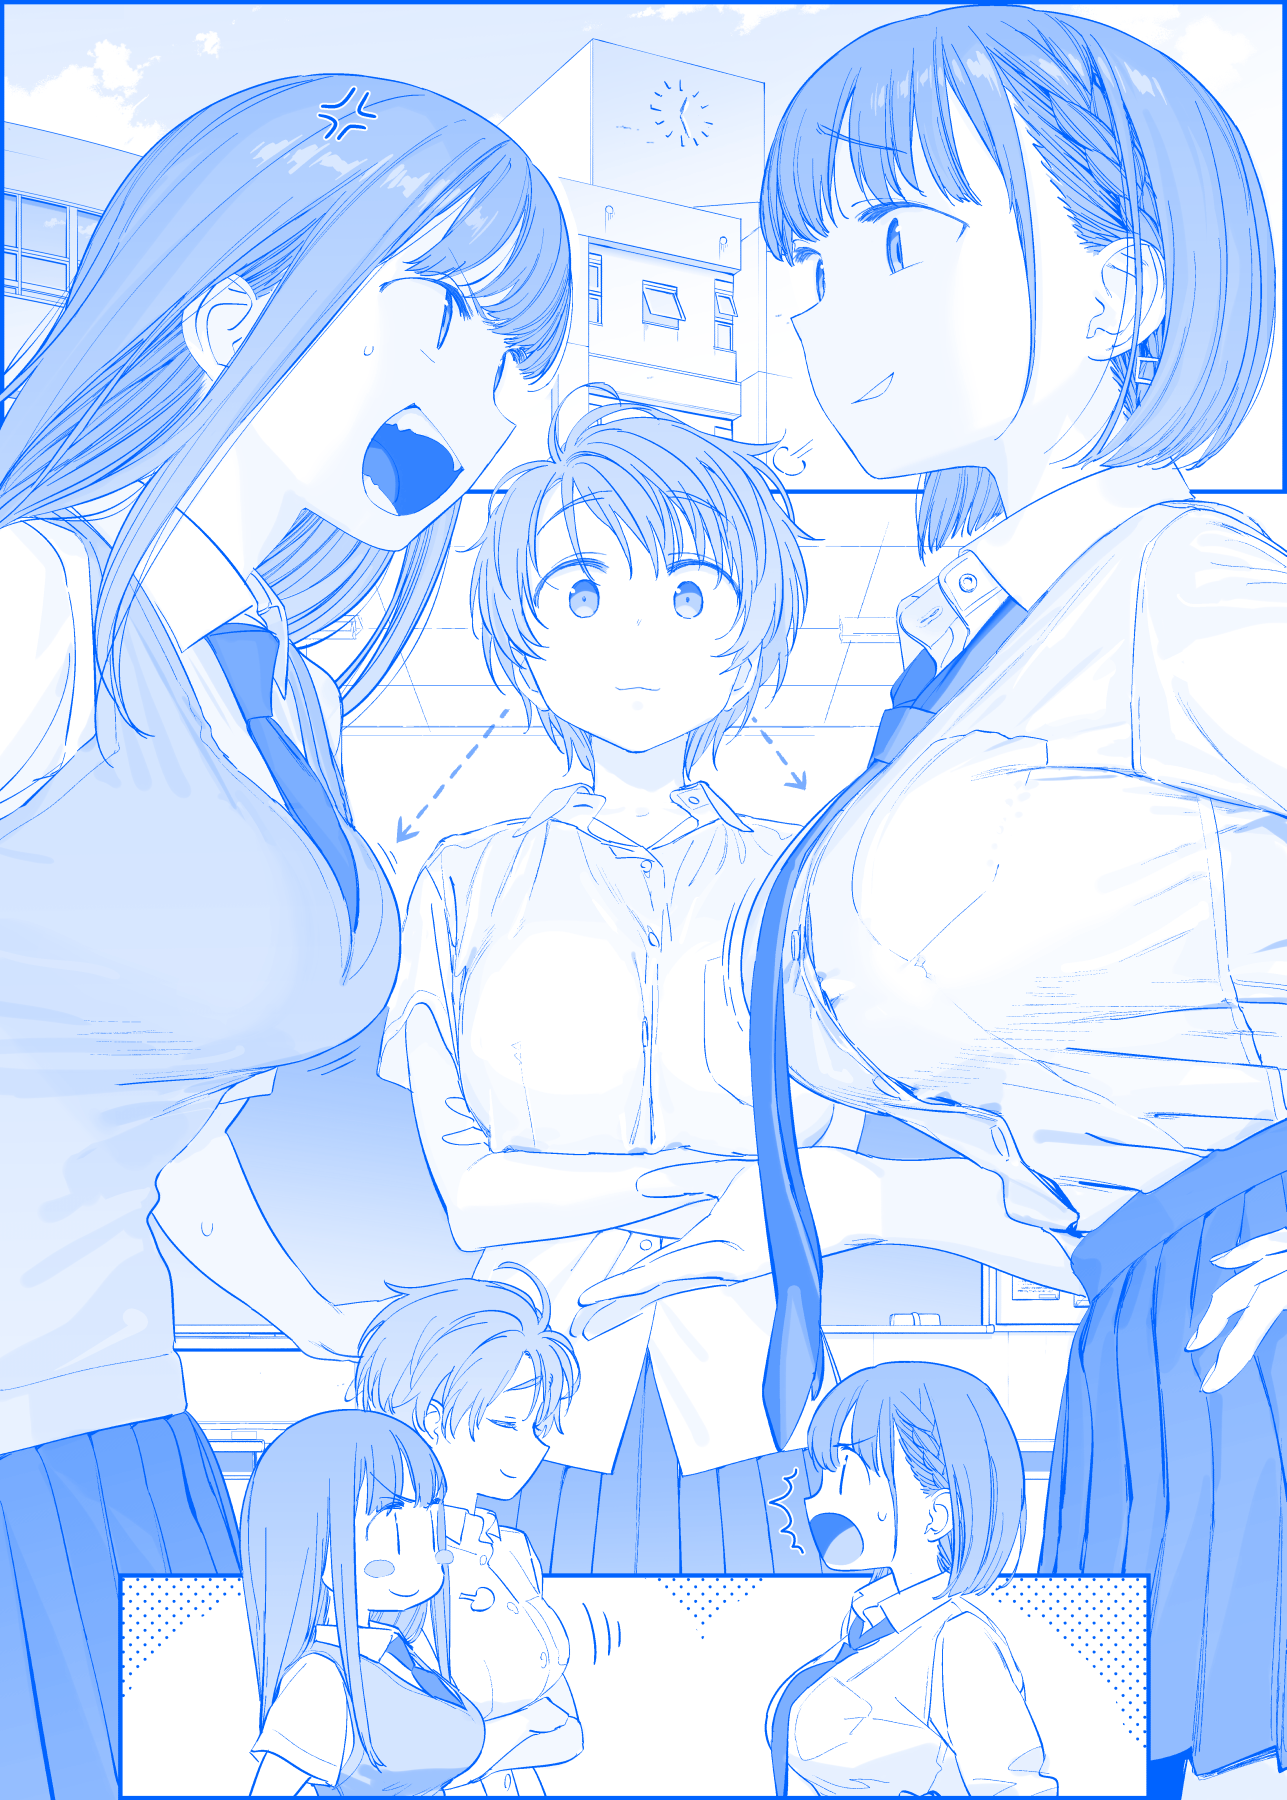 ai-chan, volley-bu-chan, and ai-chan's sister (getsuyoubi no tawawa) drawn  by himura_kiseki | Danbooru